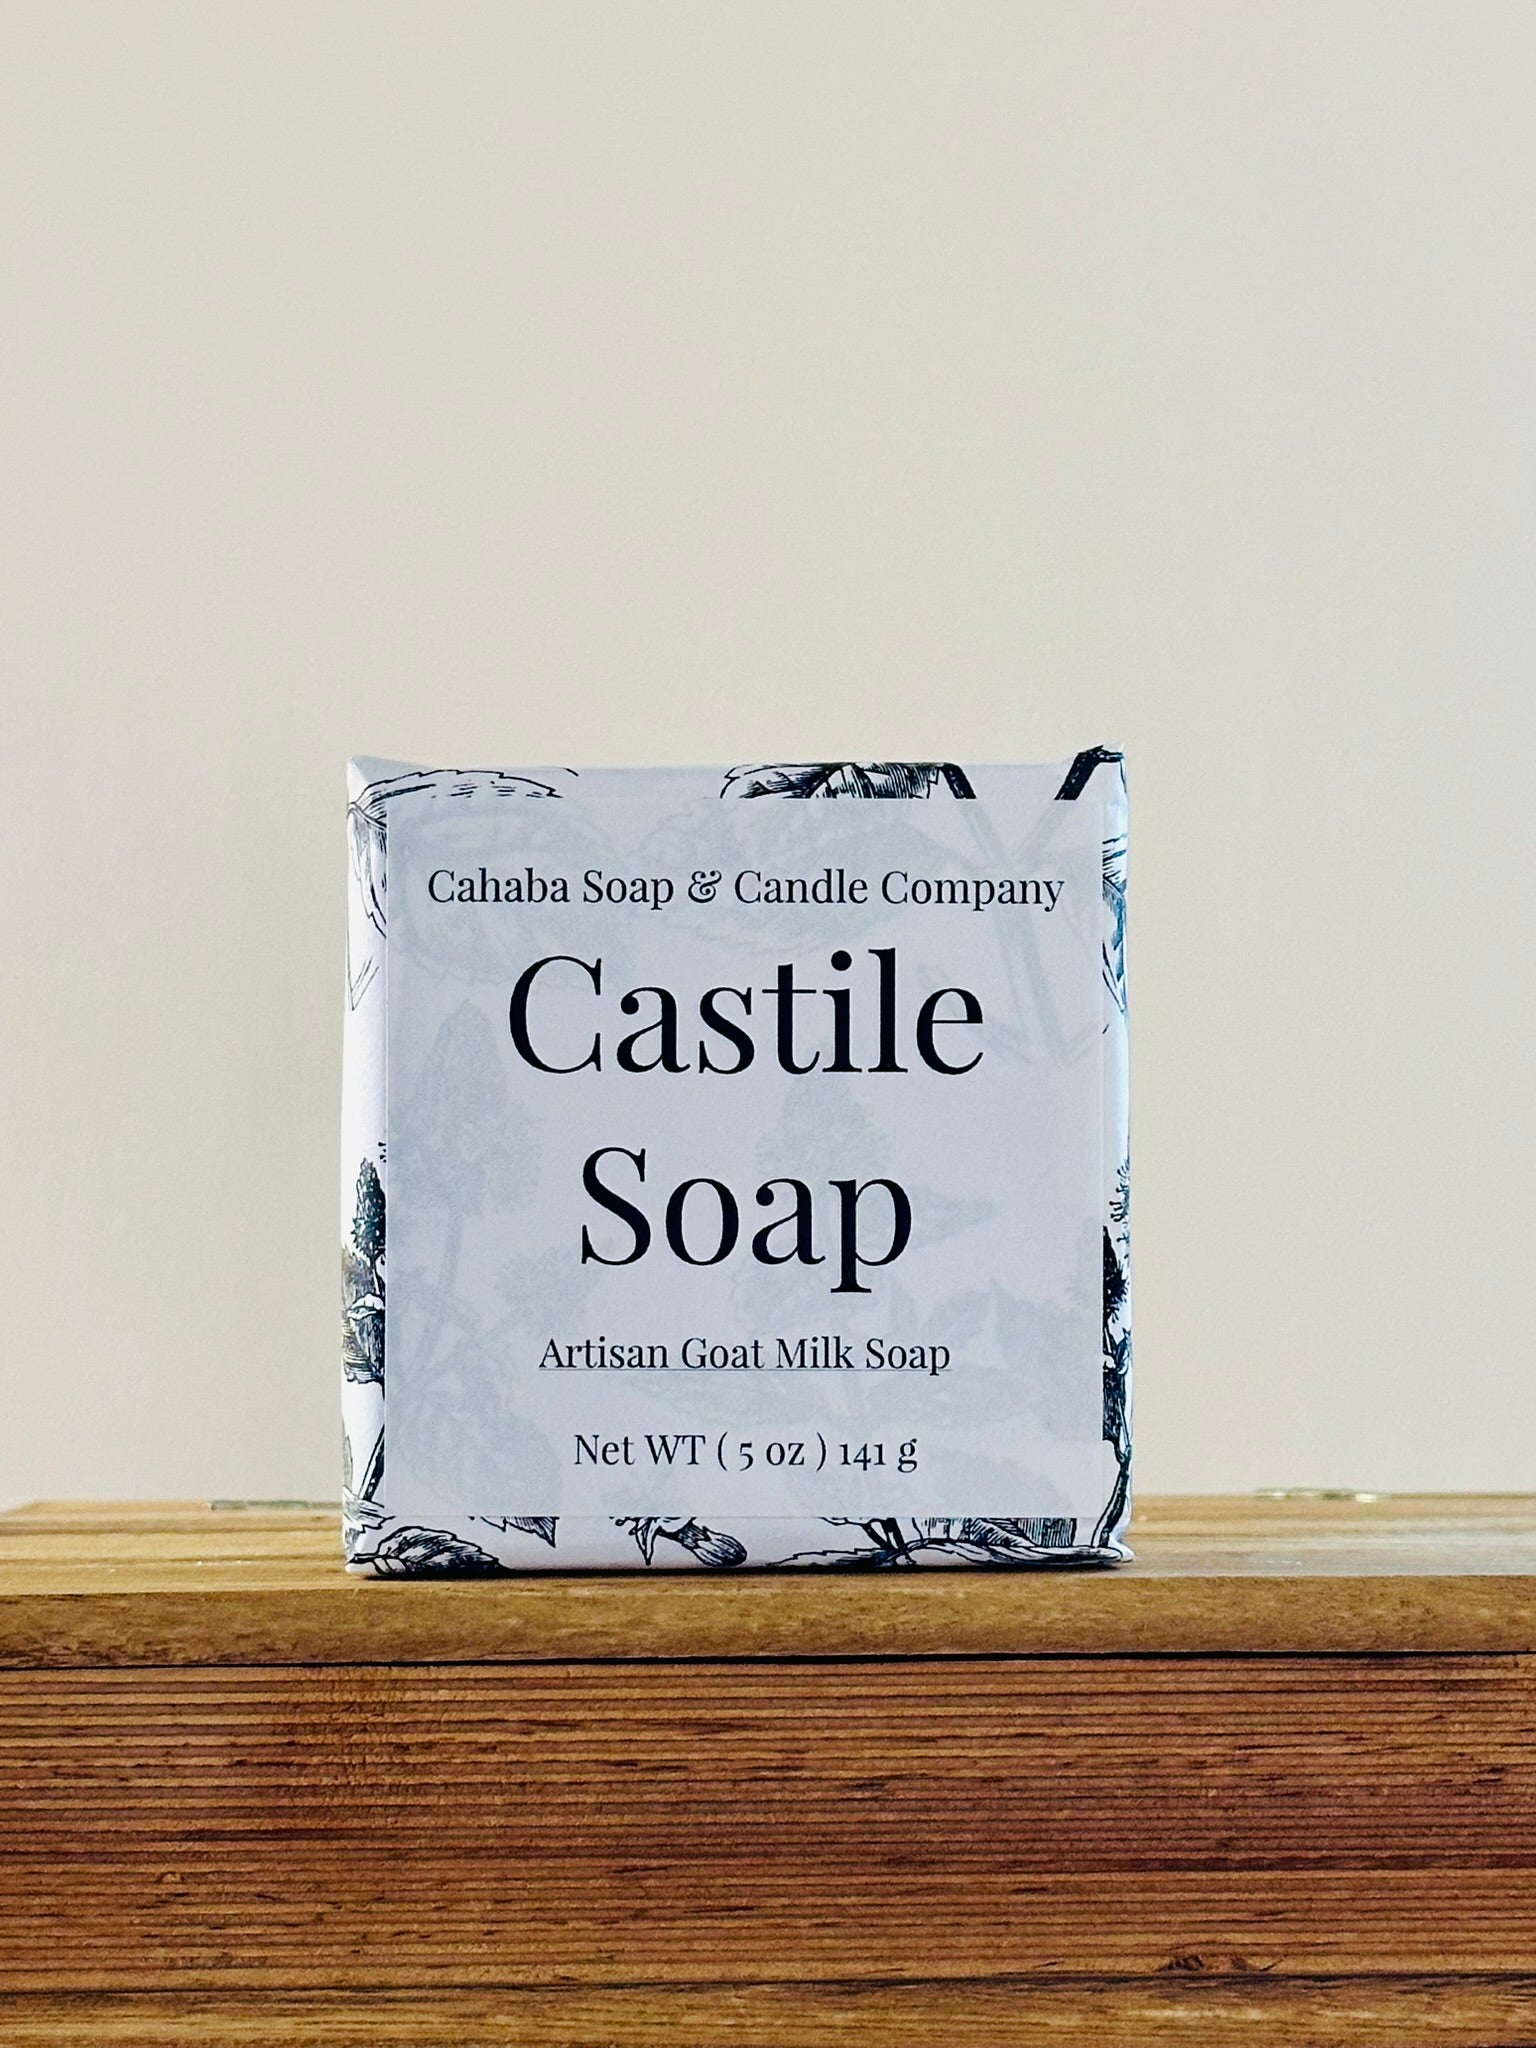 Castile Soap - Cahaba Soap and Candle Company